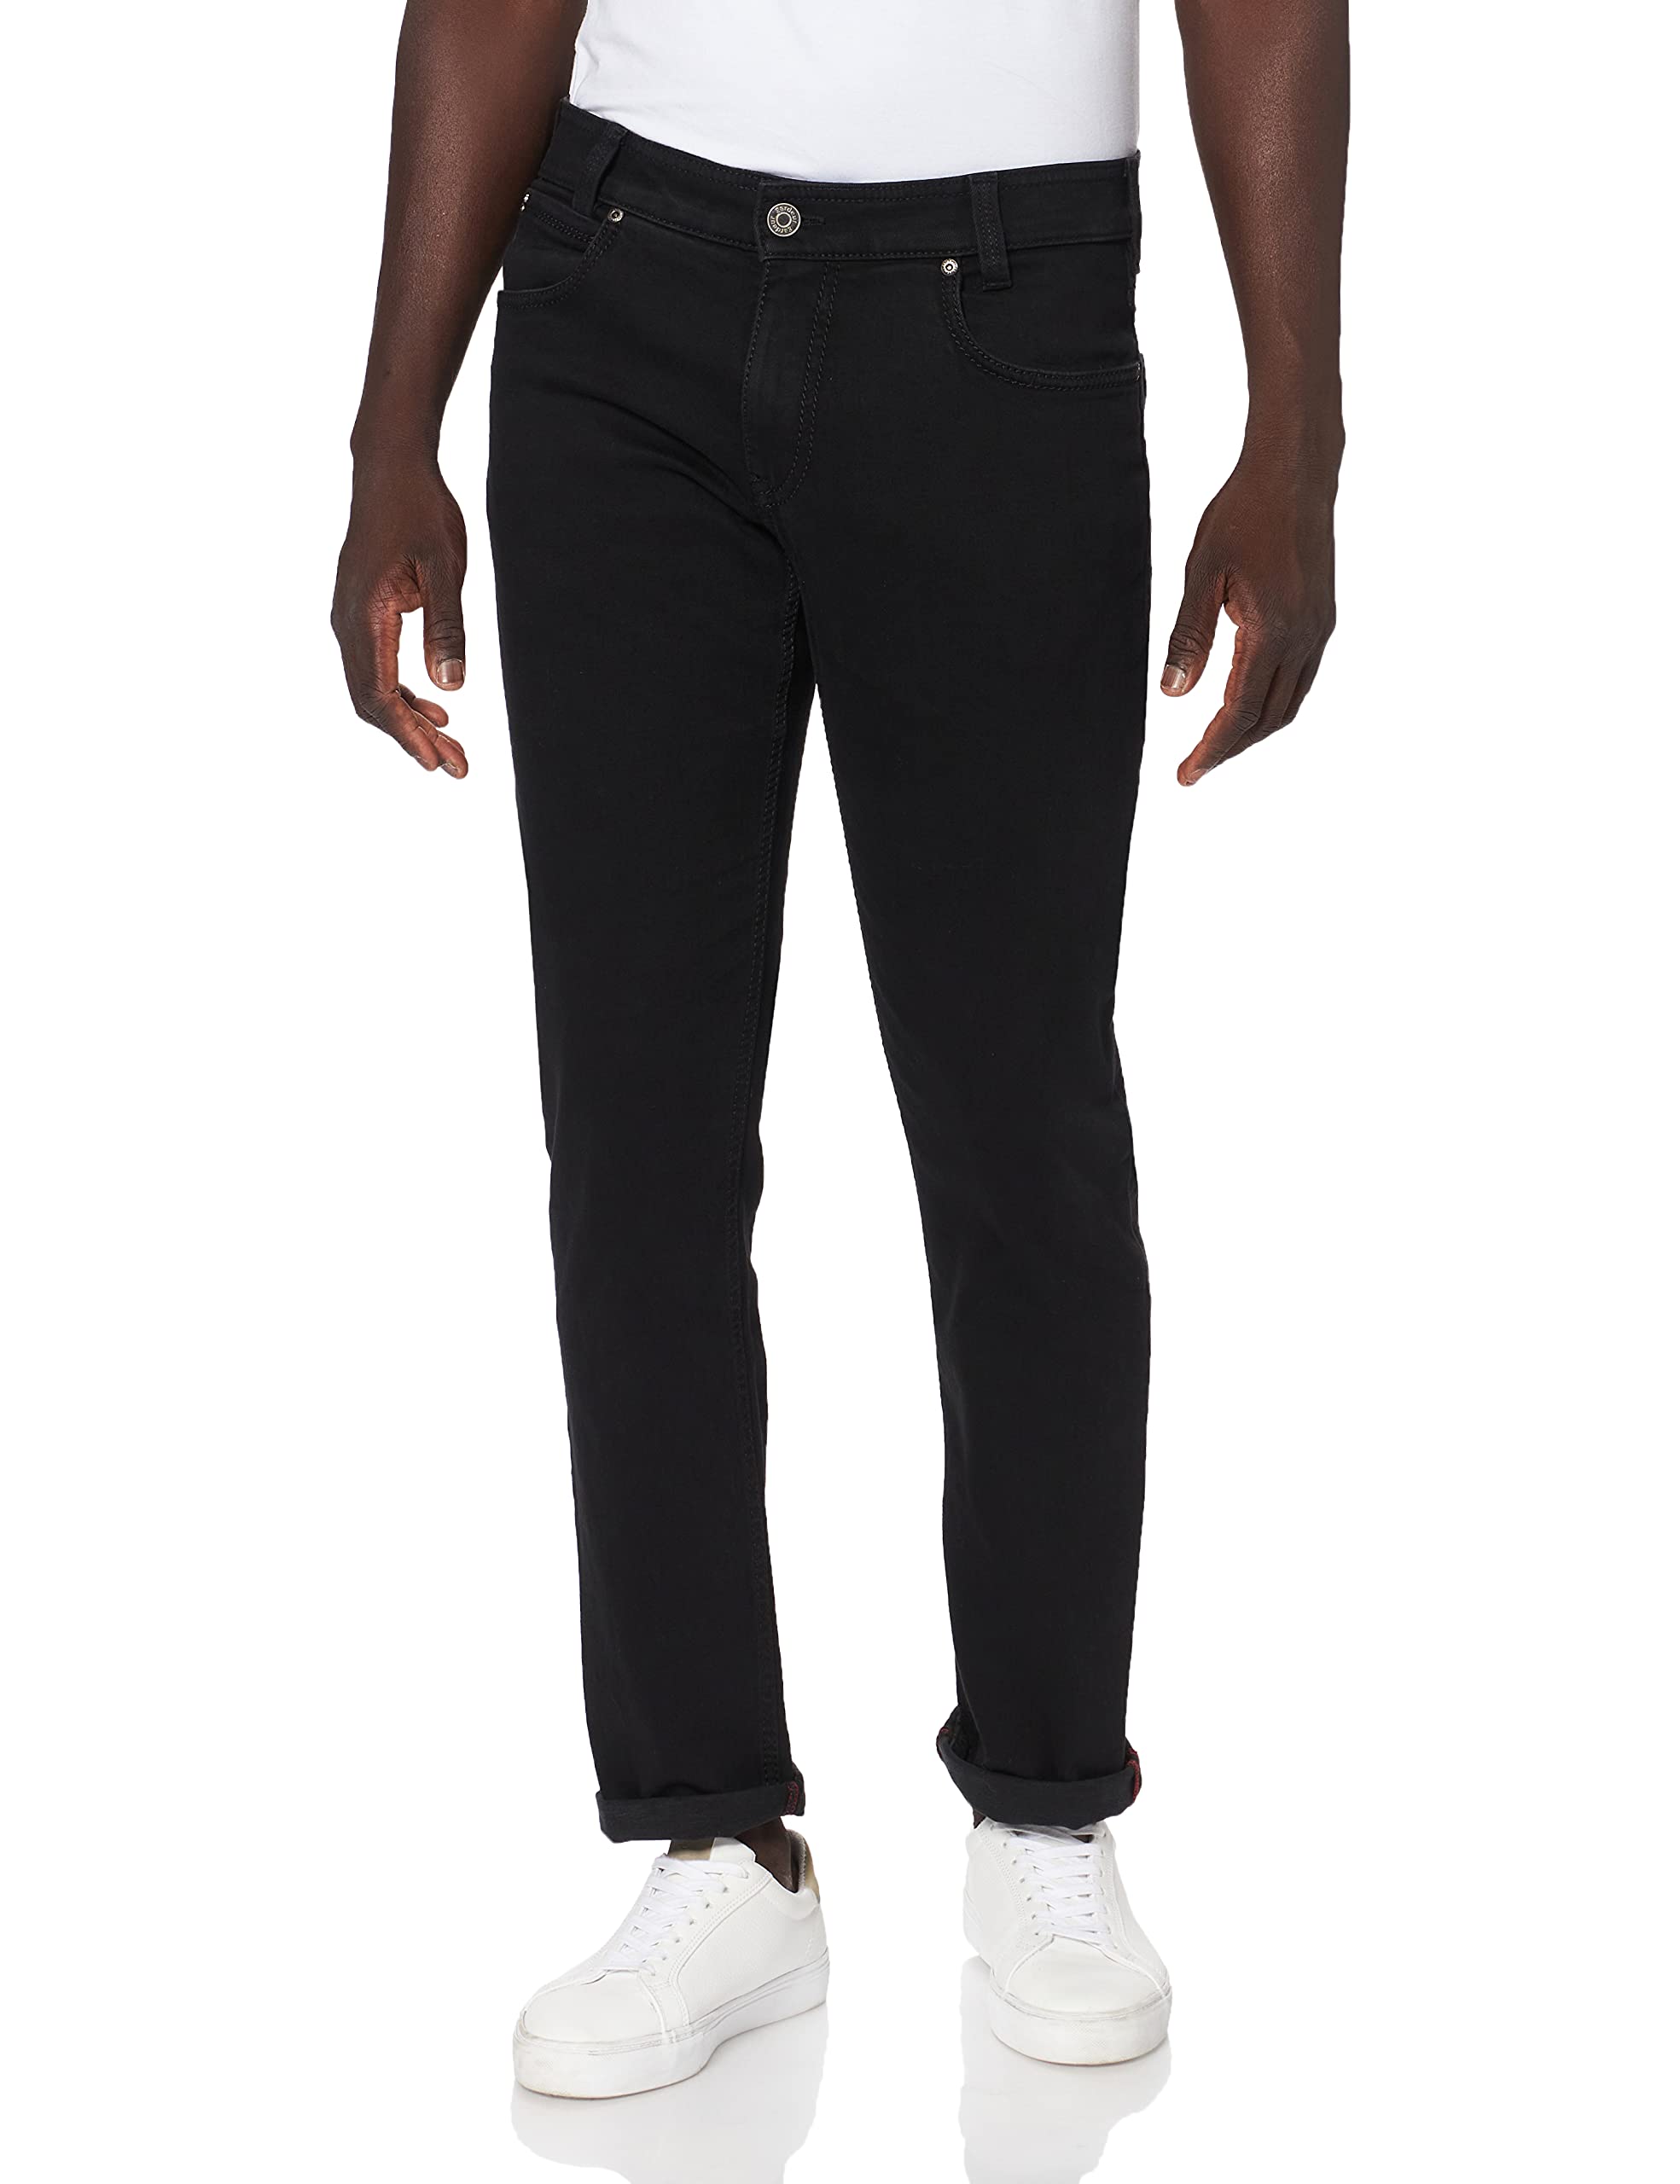 Atelier GARDEUR Herren Batu Comfort Stretch Jeans, Black/Black 799, 44W / 32L